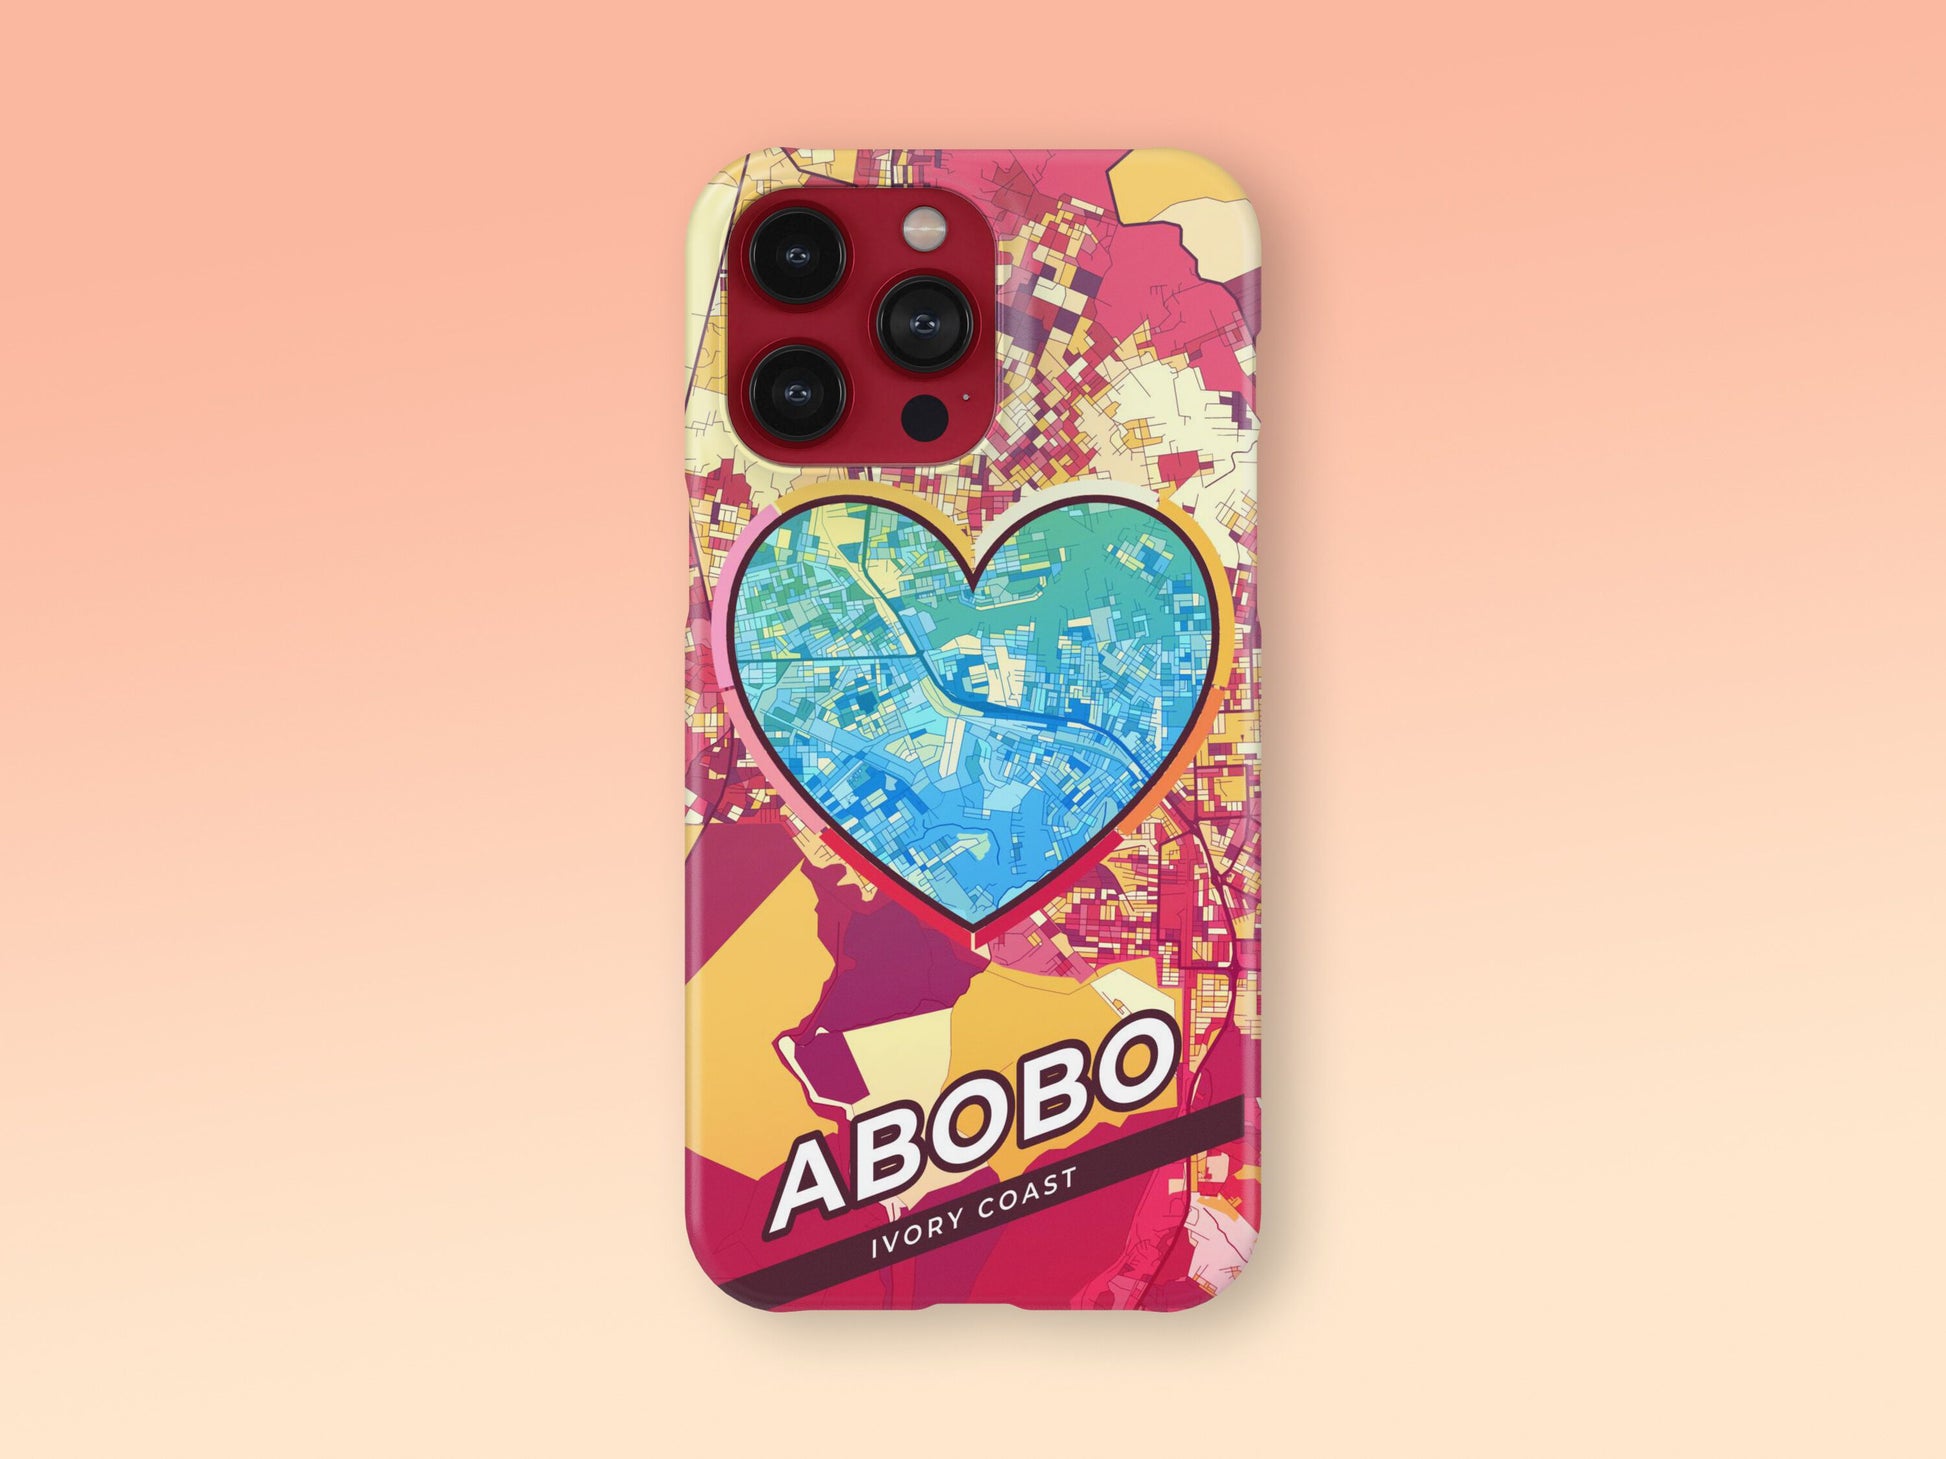 Abobo Ivory Coast slim phone case with colorful icon. Birthday, wedding or housewarming gift. Couple match cases. 2